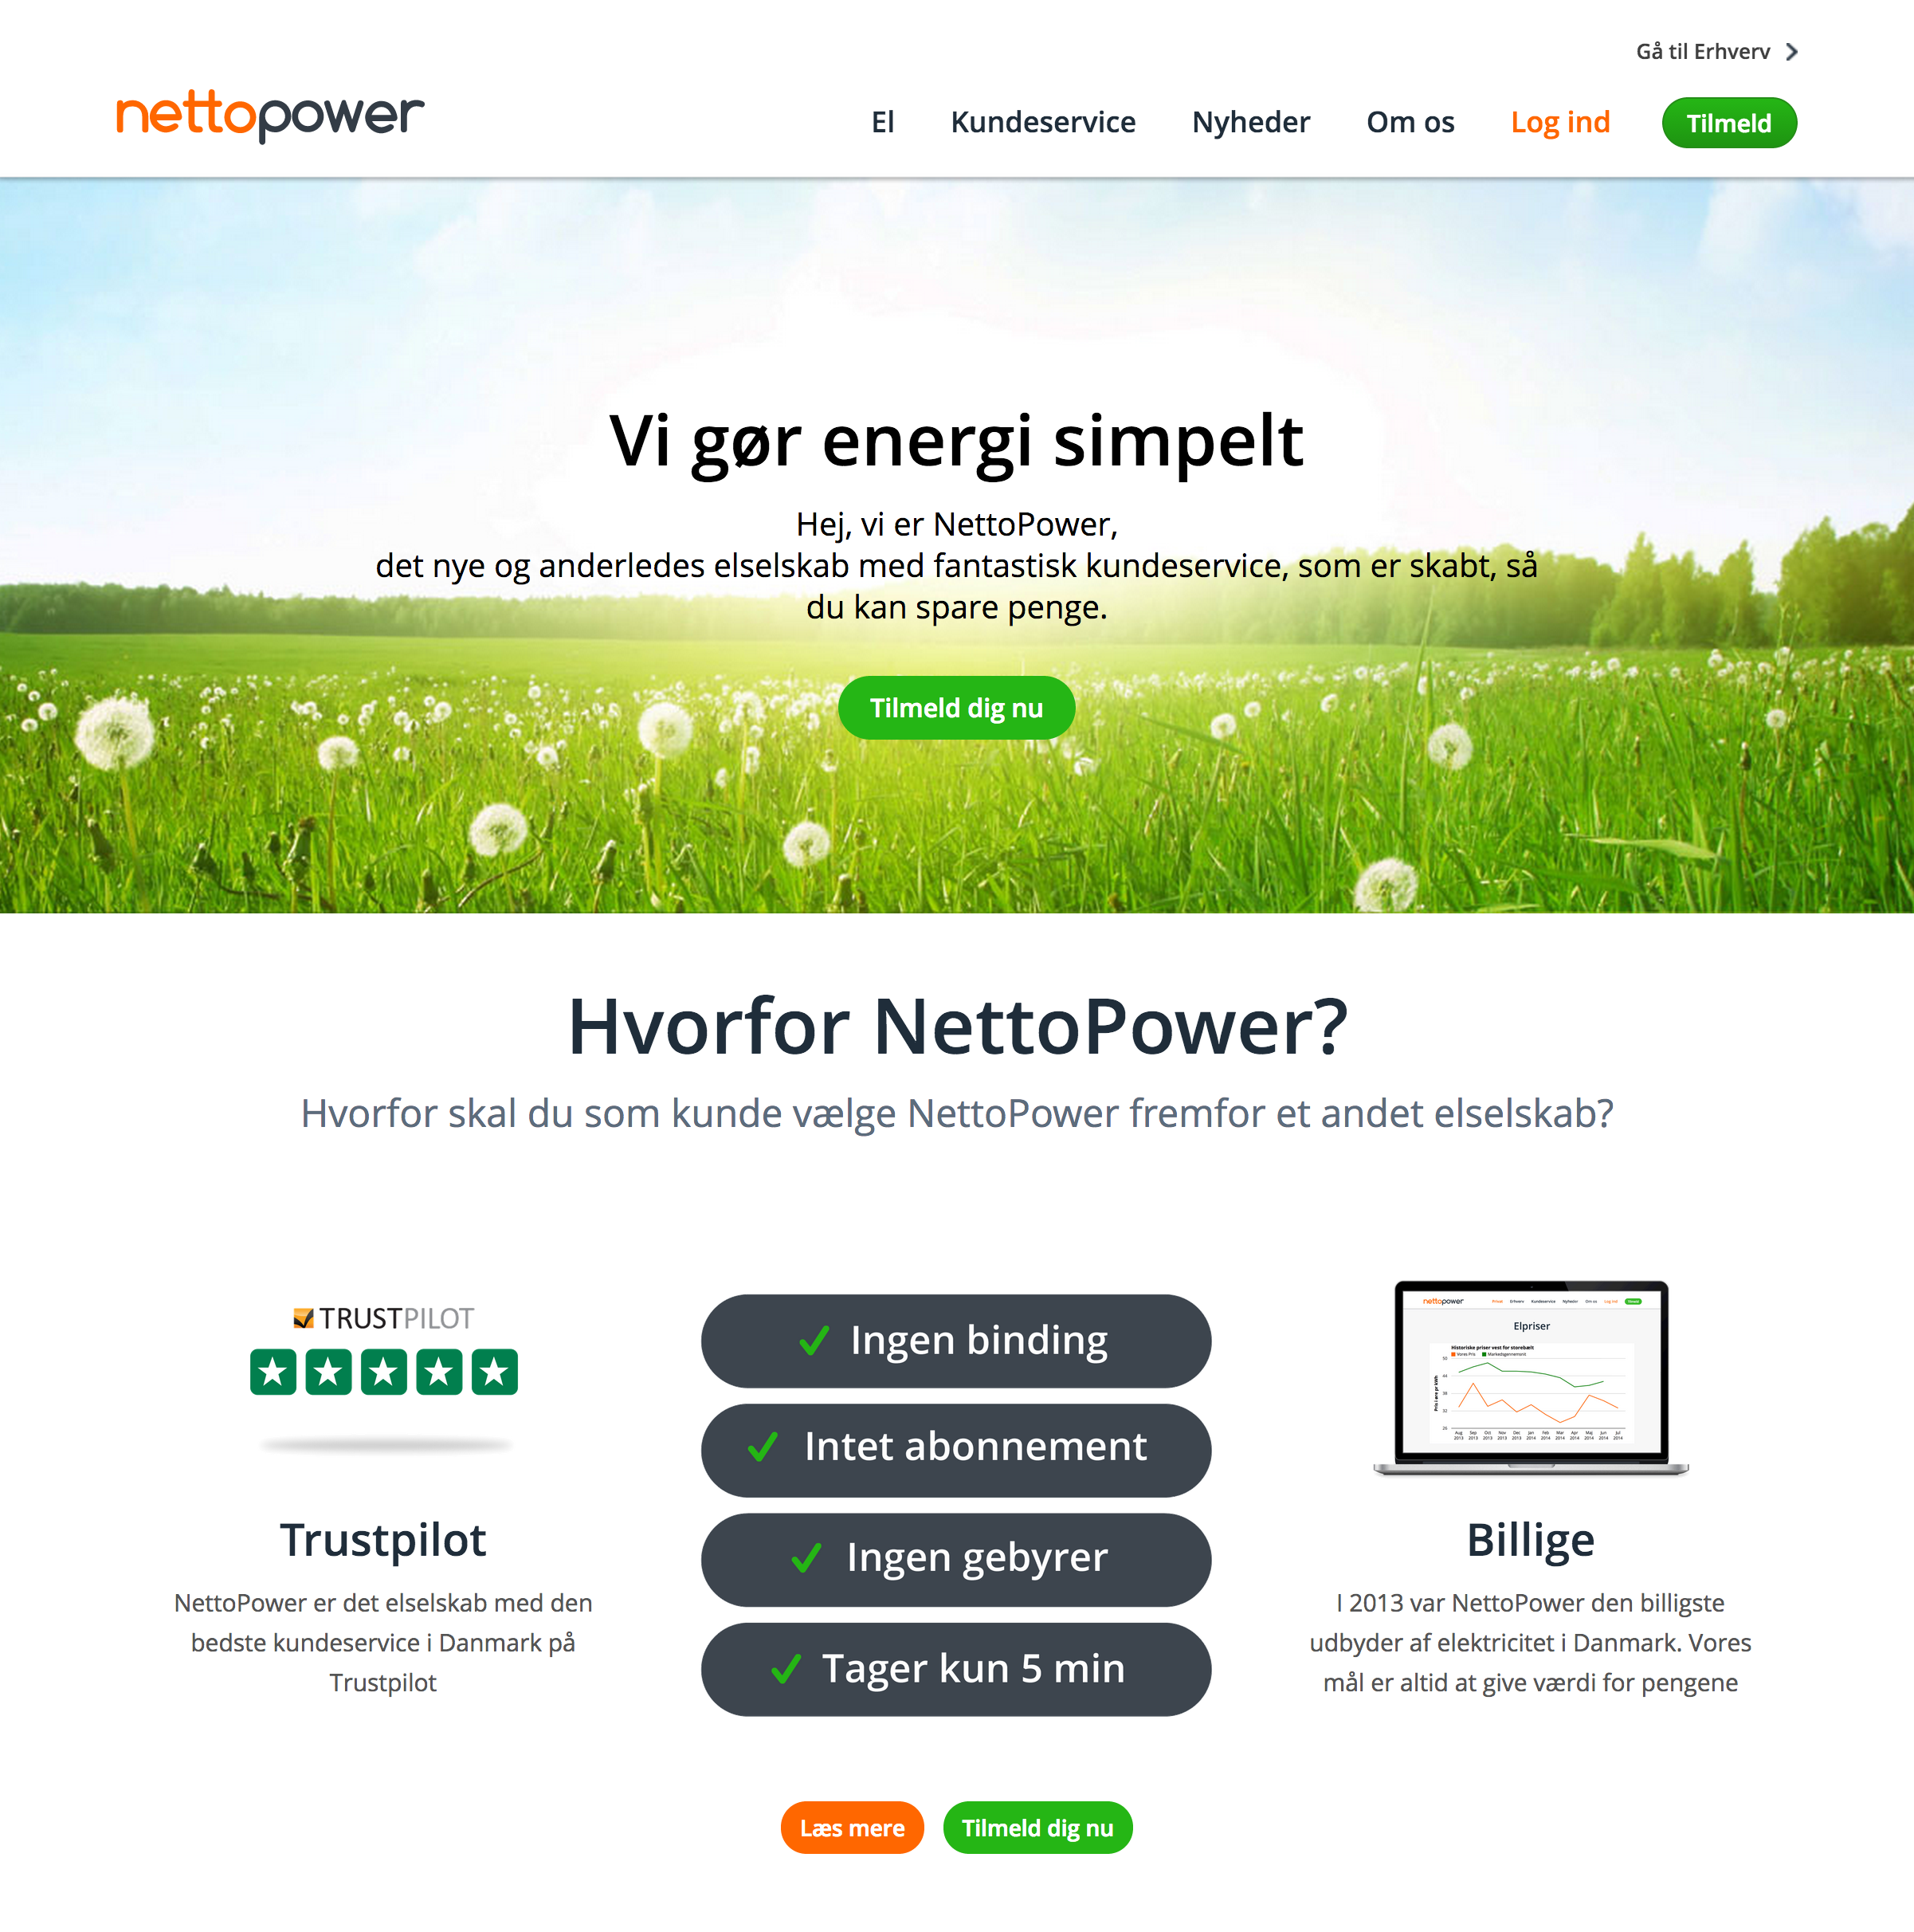 NettoPower   Billigste elpris uden abonnement og binding.png